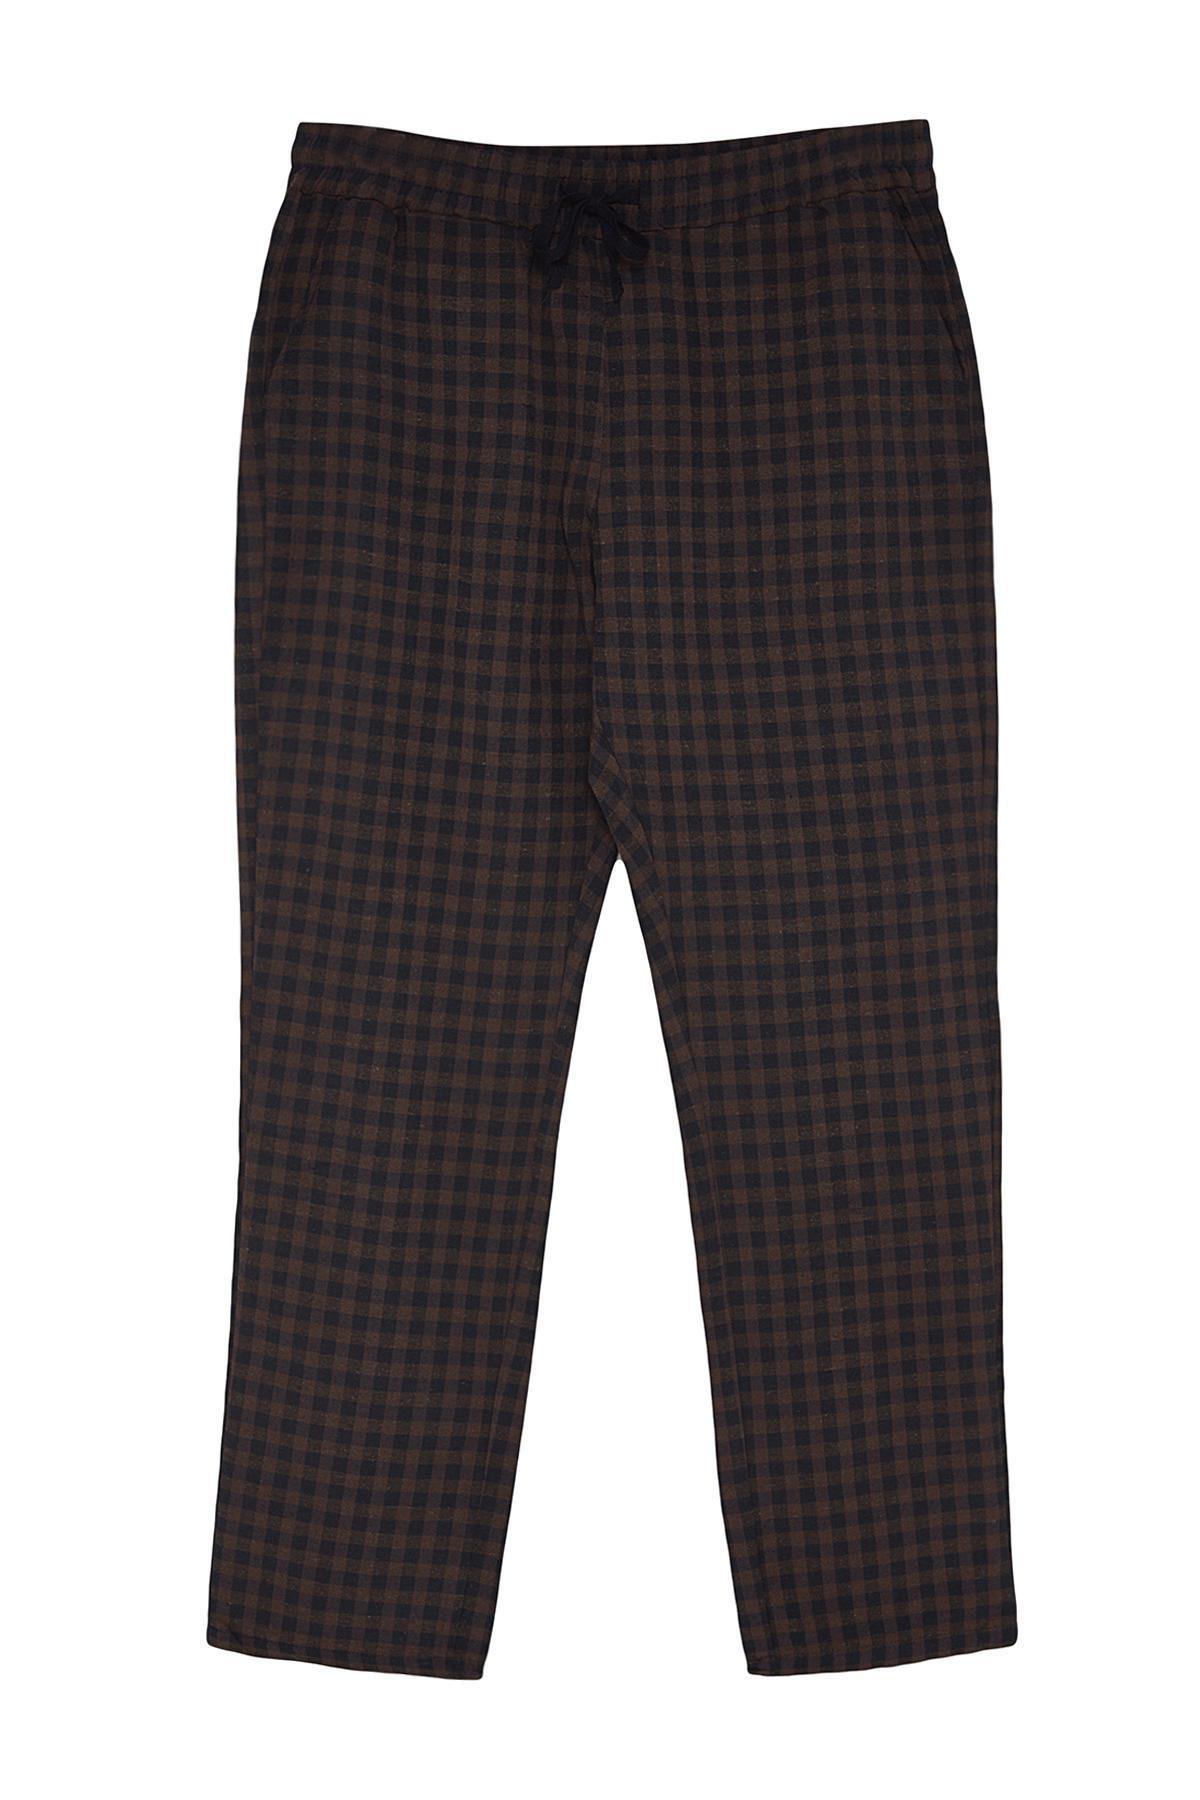 Trendyol - Blue Checkered Pyjama Bottoms